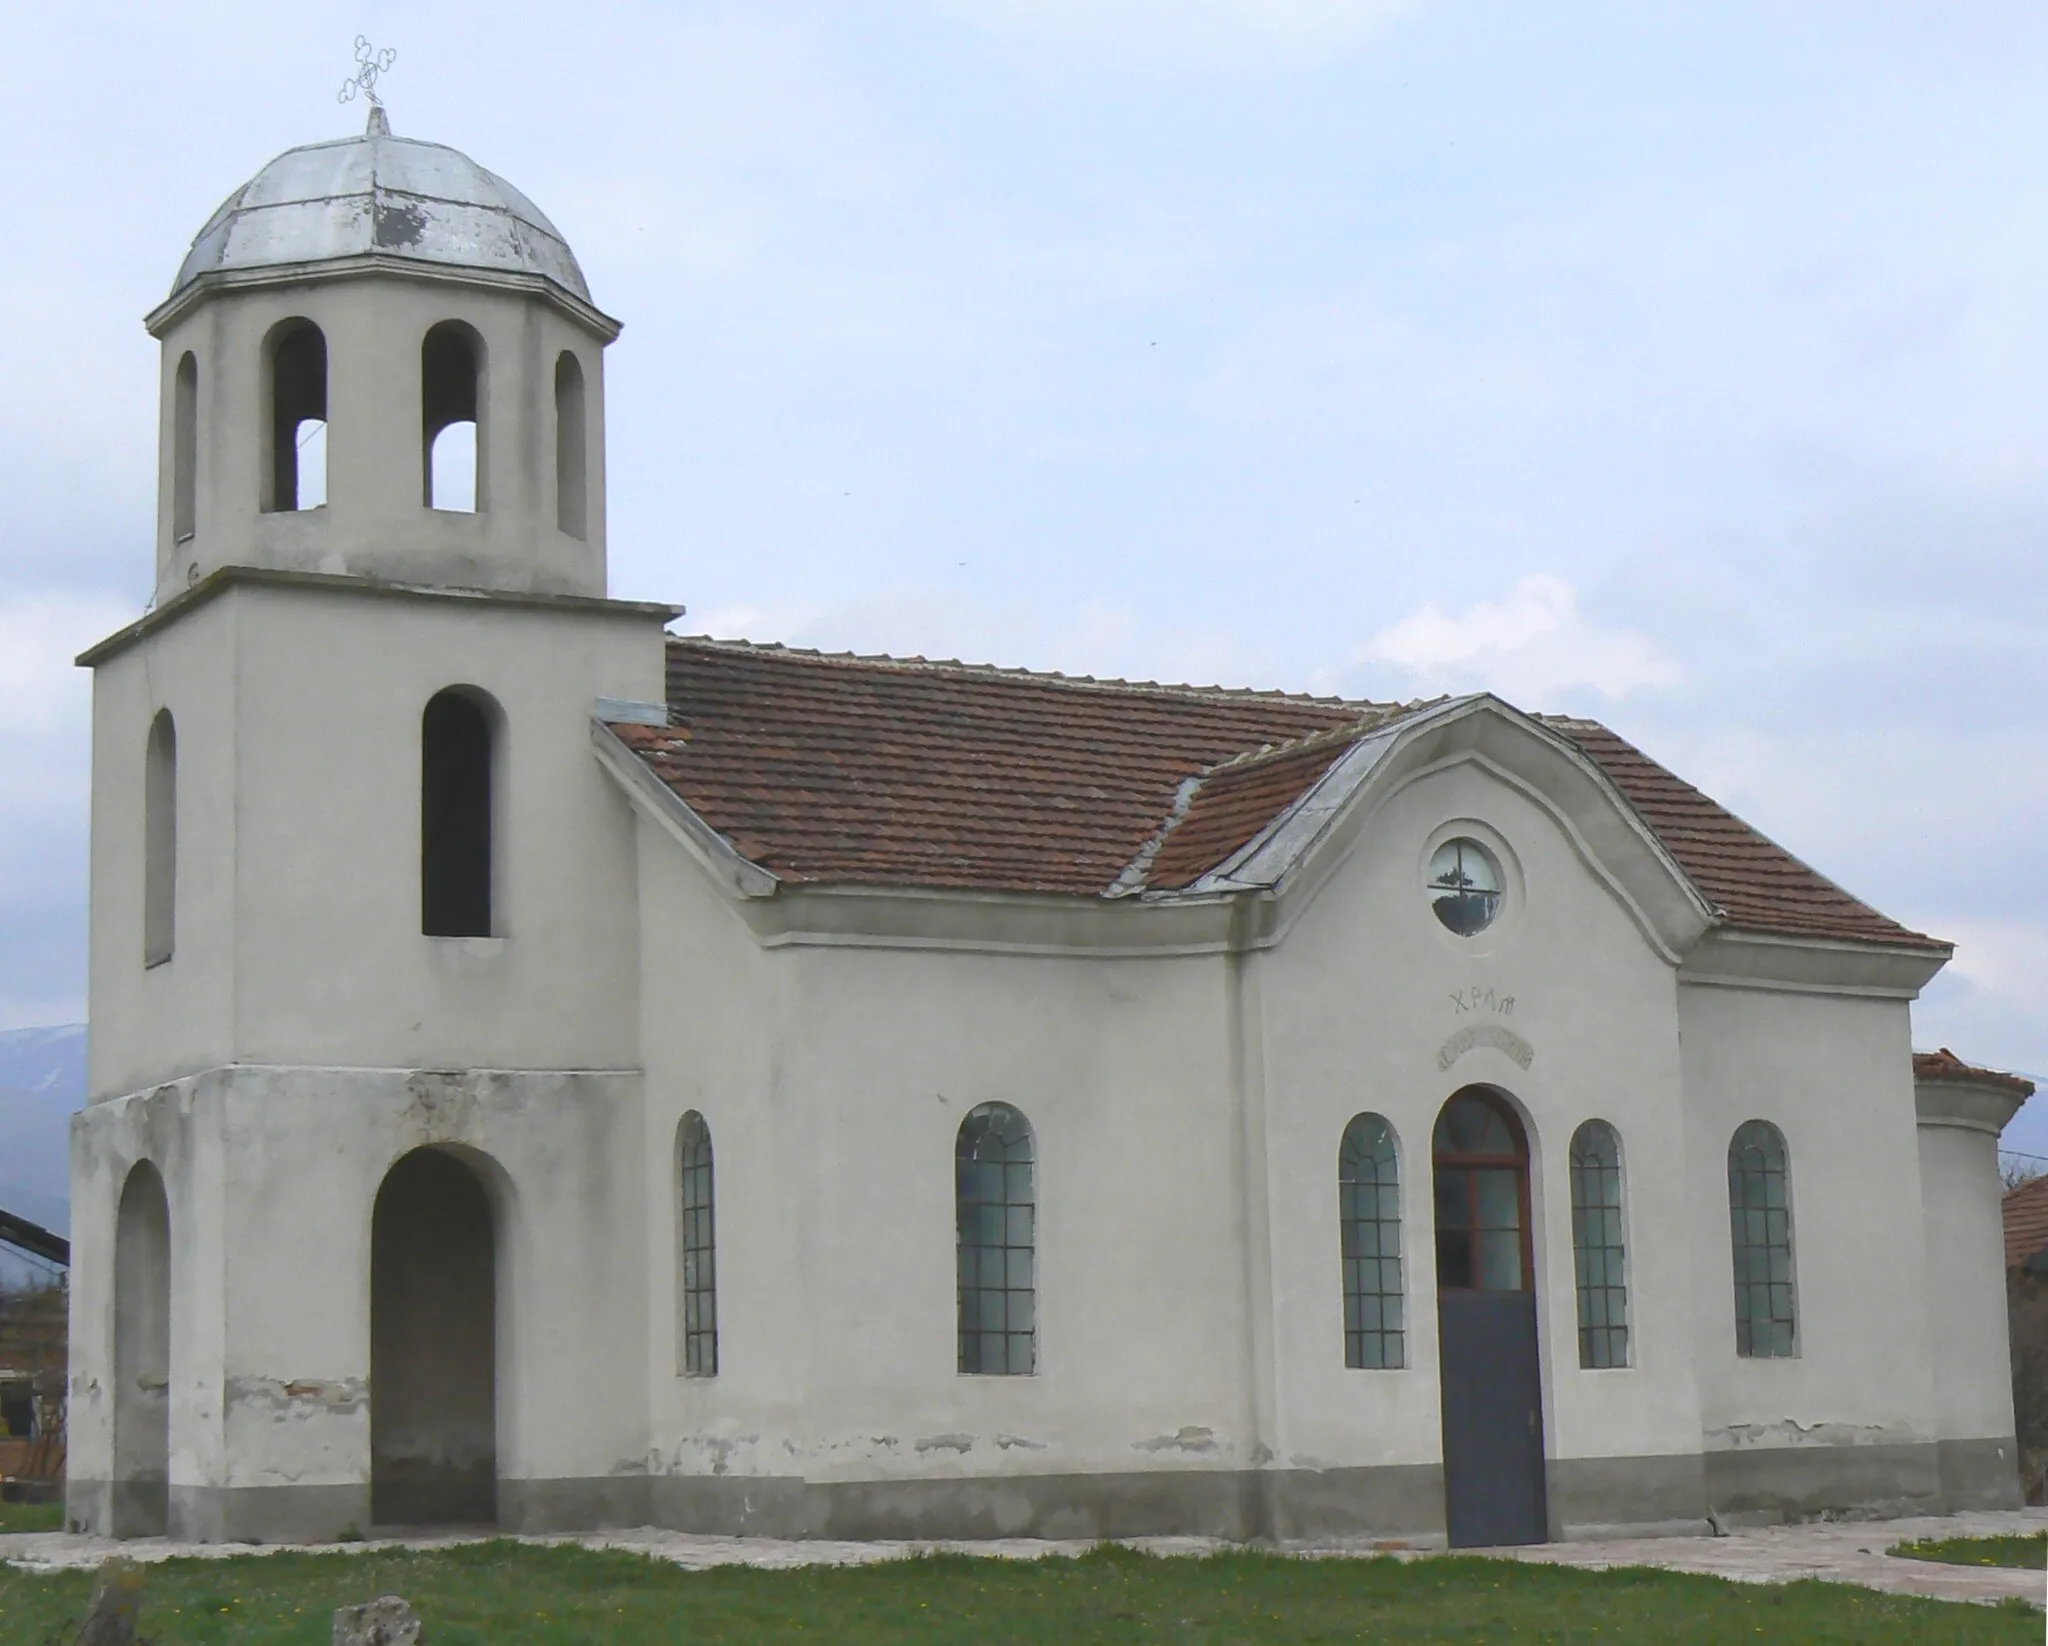 Photo showing: The church "St Evstatii" in village Karlievo, Bulgaria